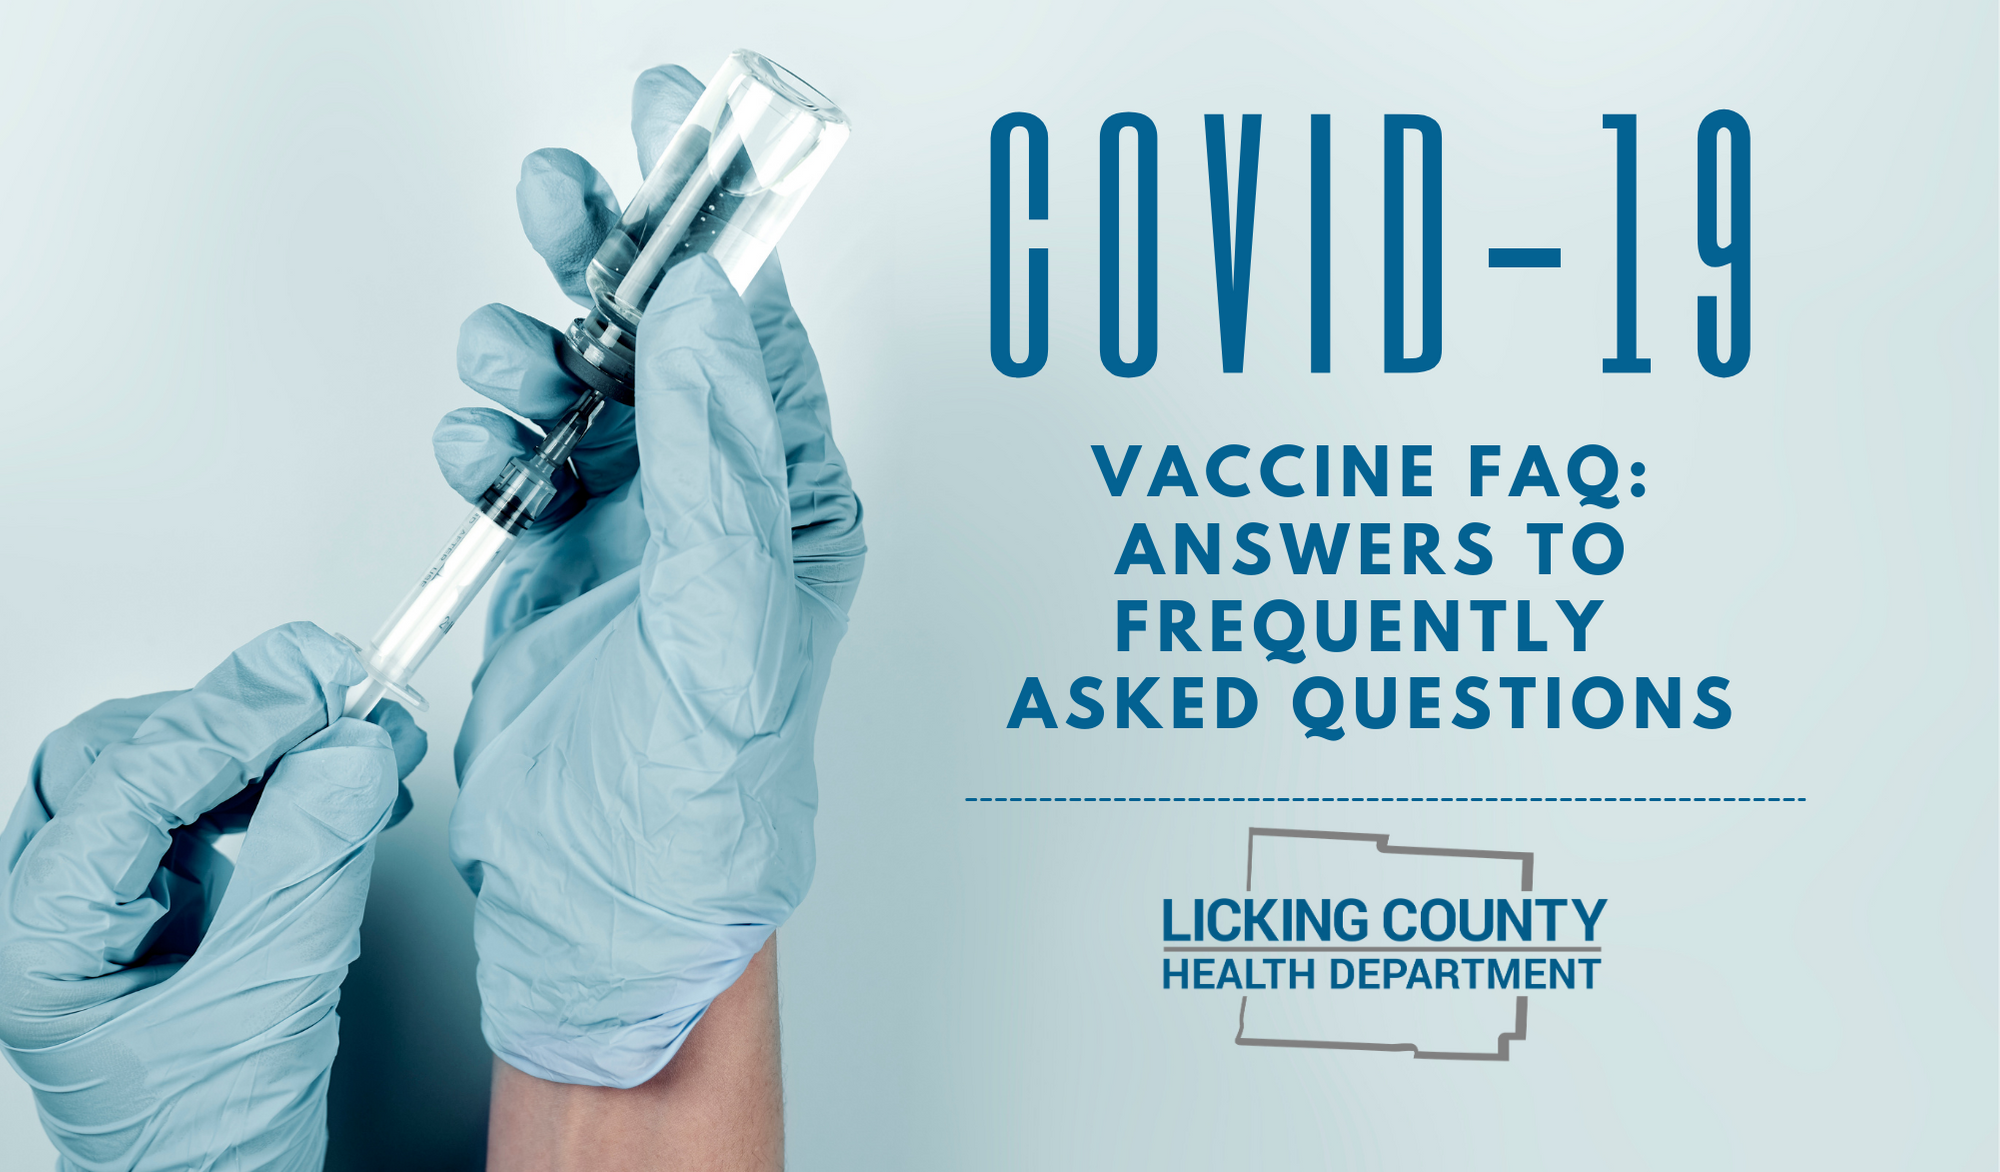 Vaccine FAQ Image 2